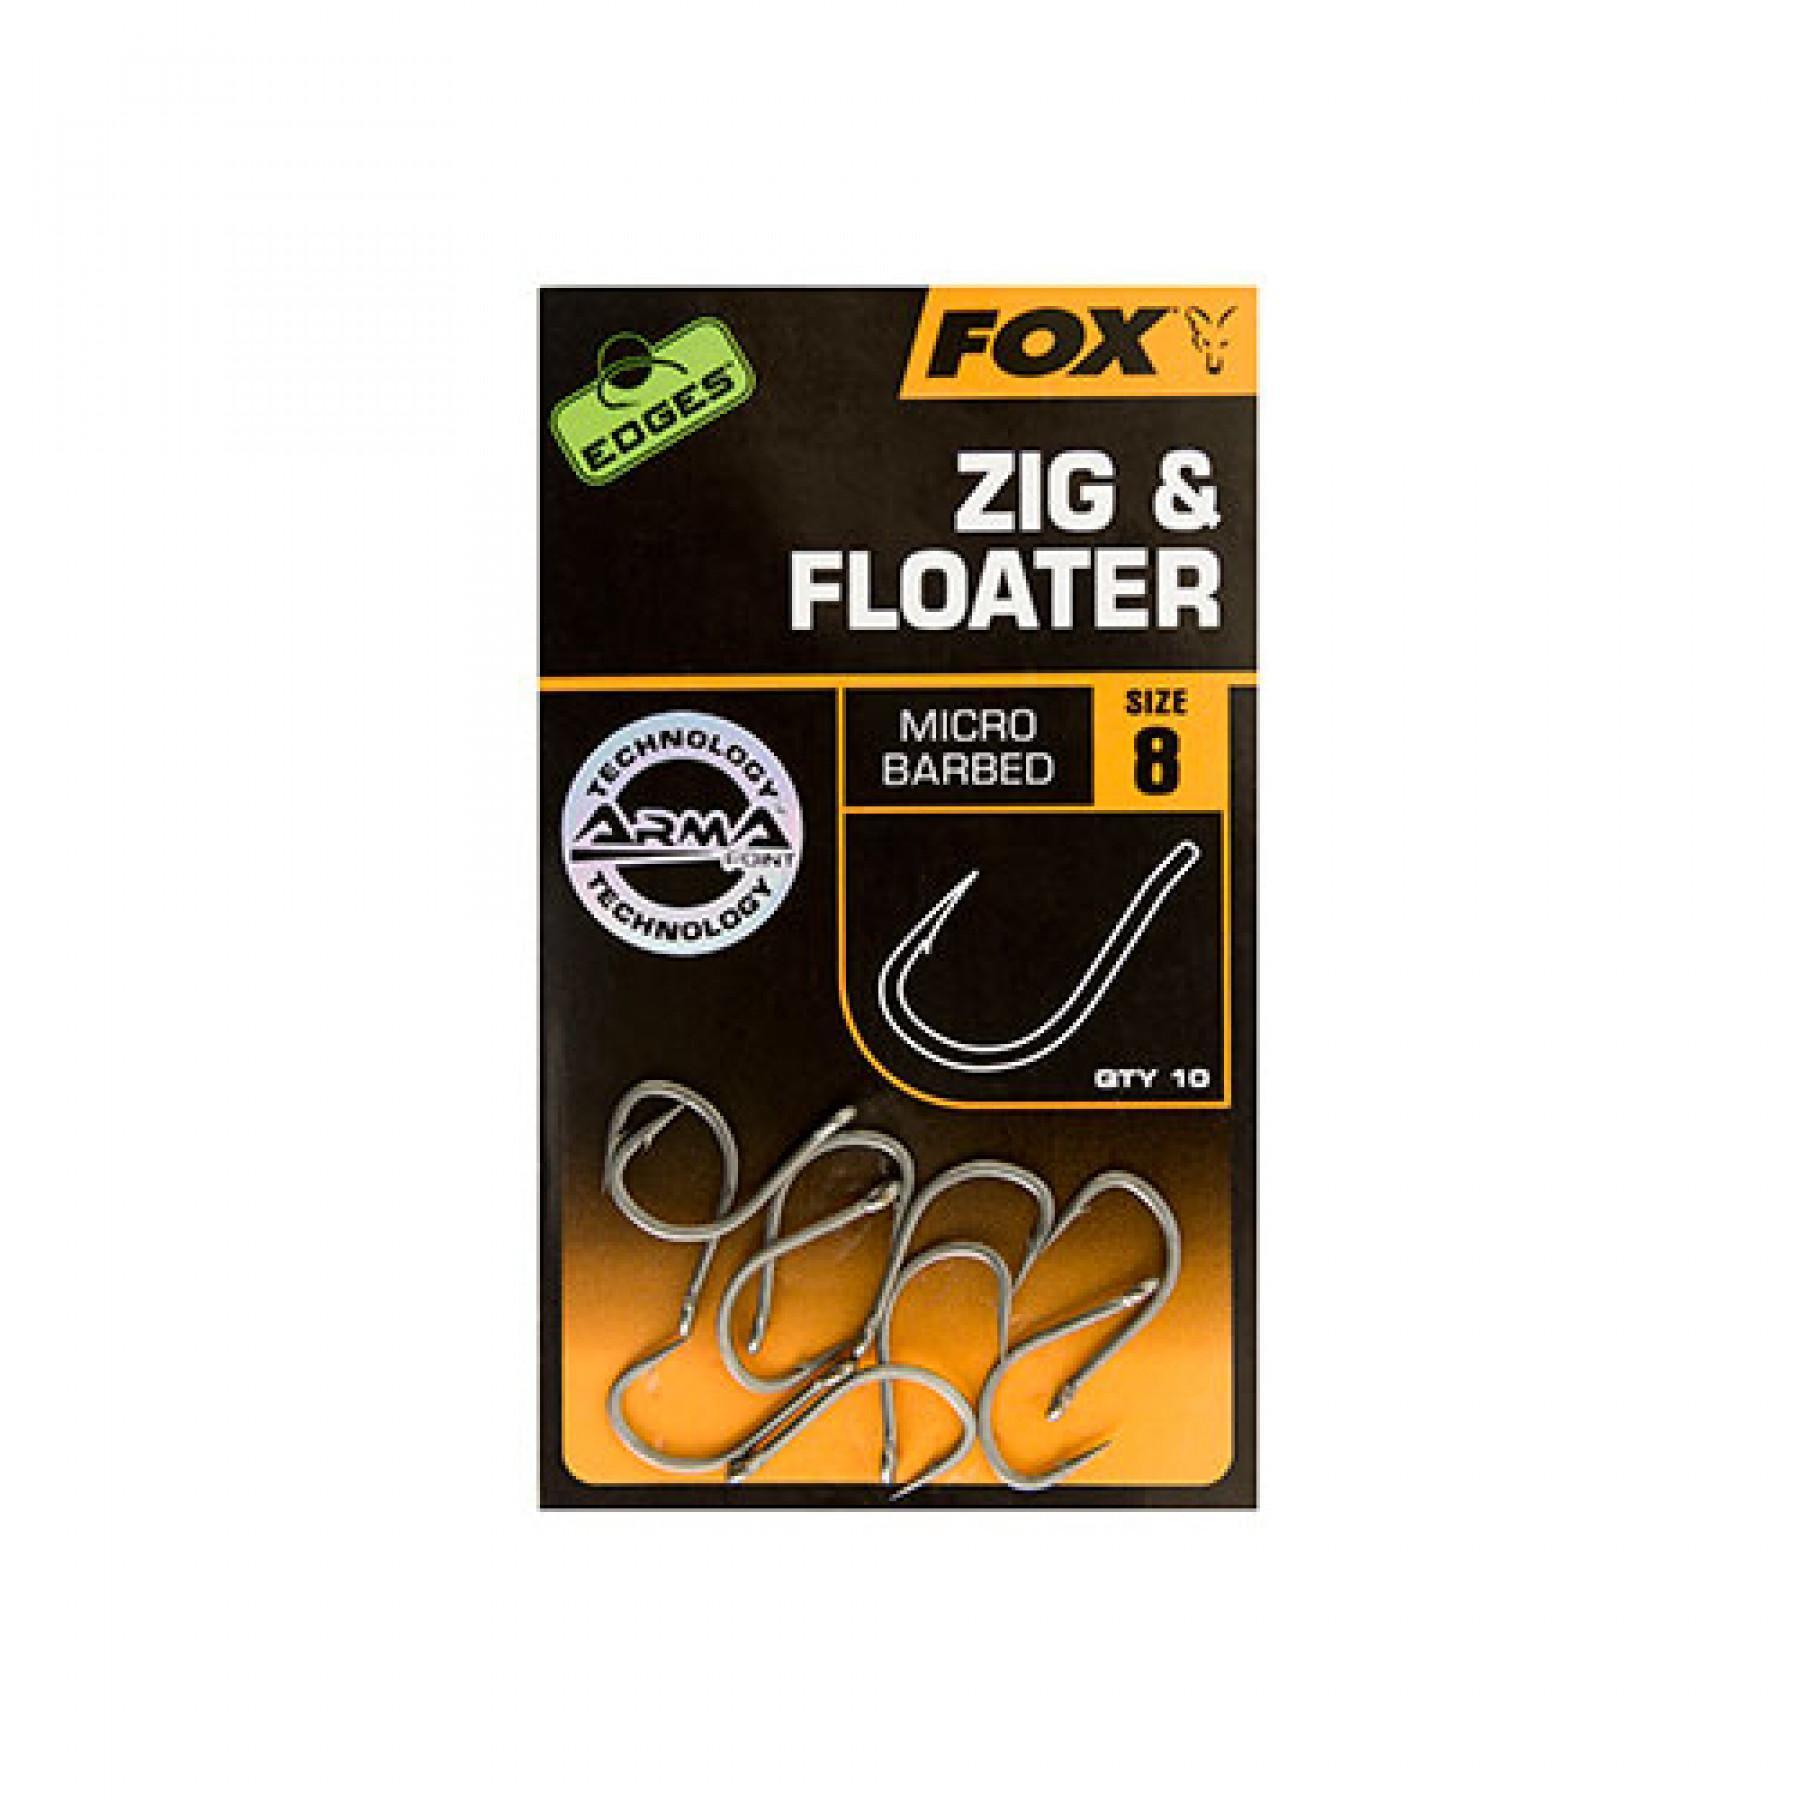 Haak Fox Zig & Floater Edges taille 10